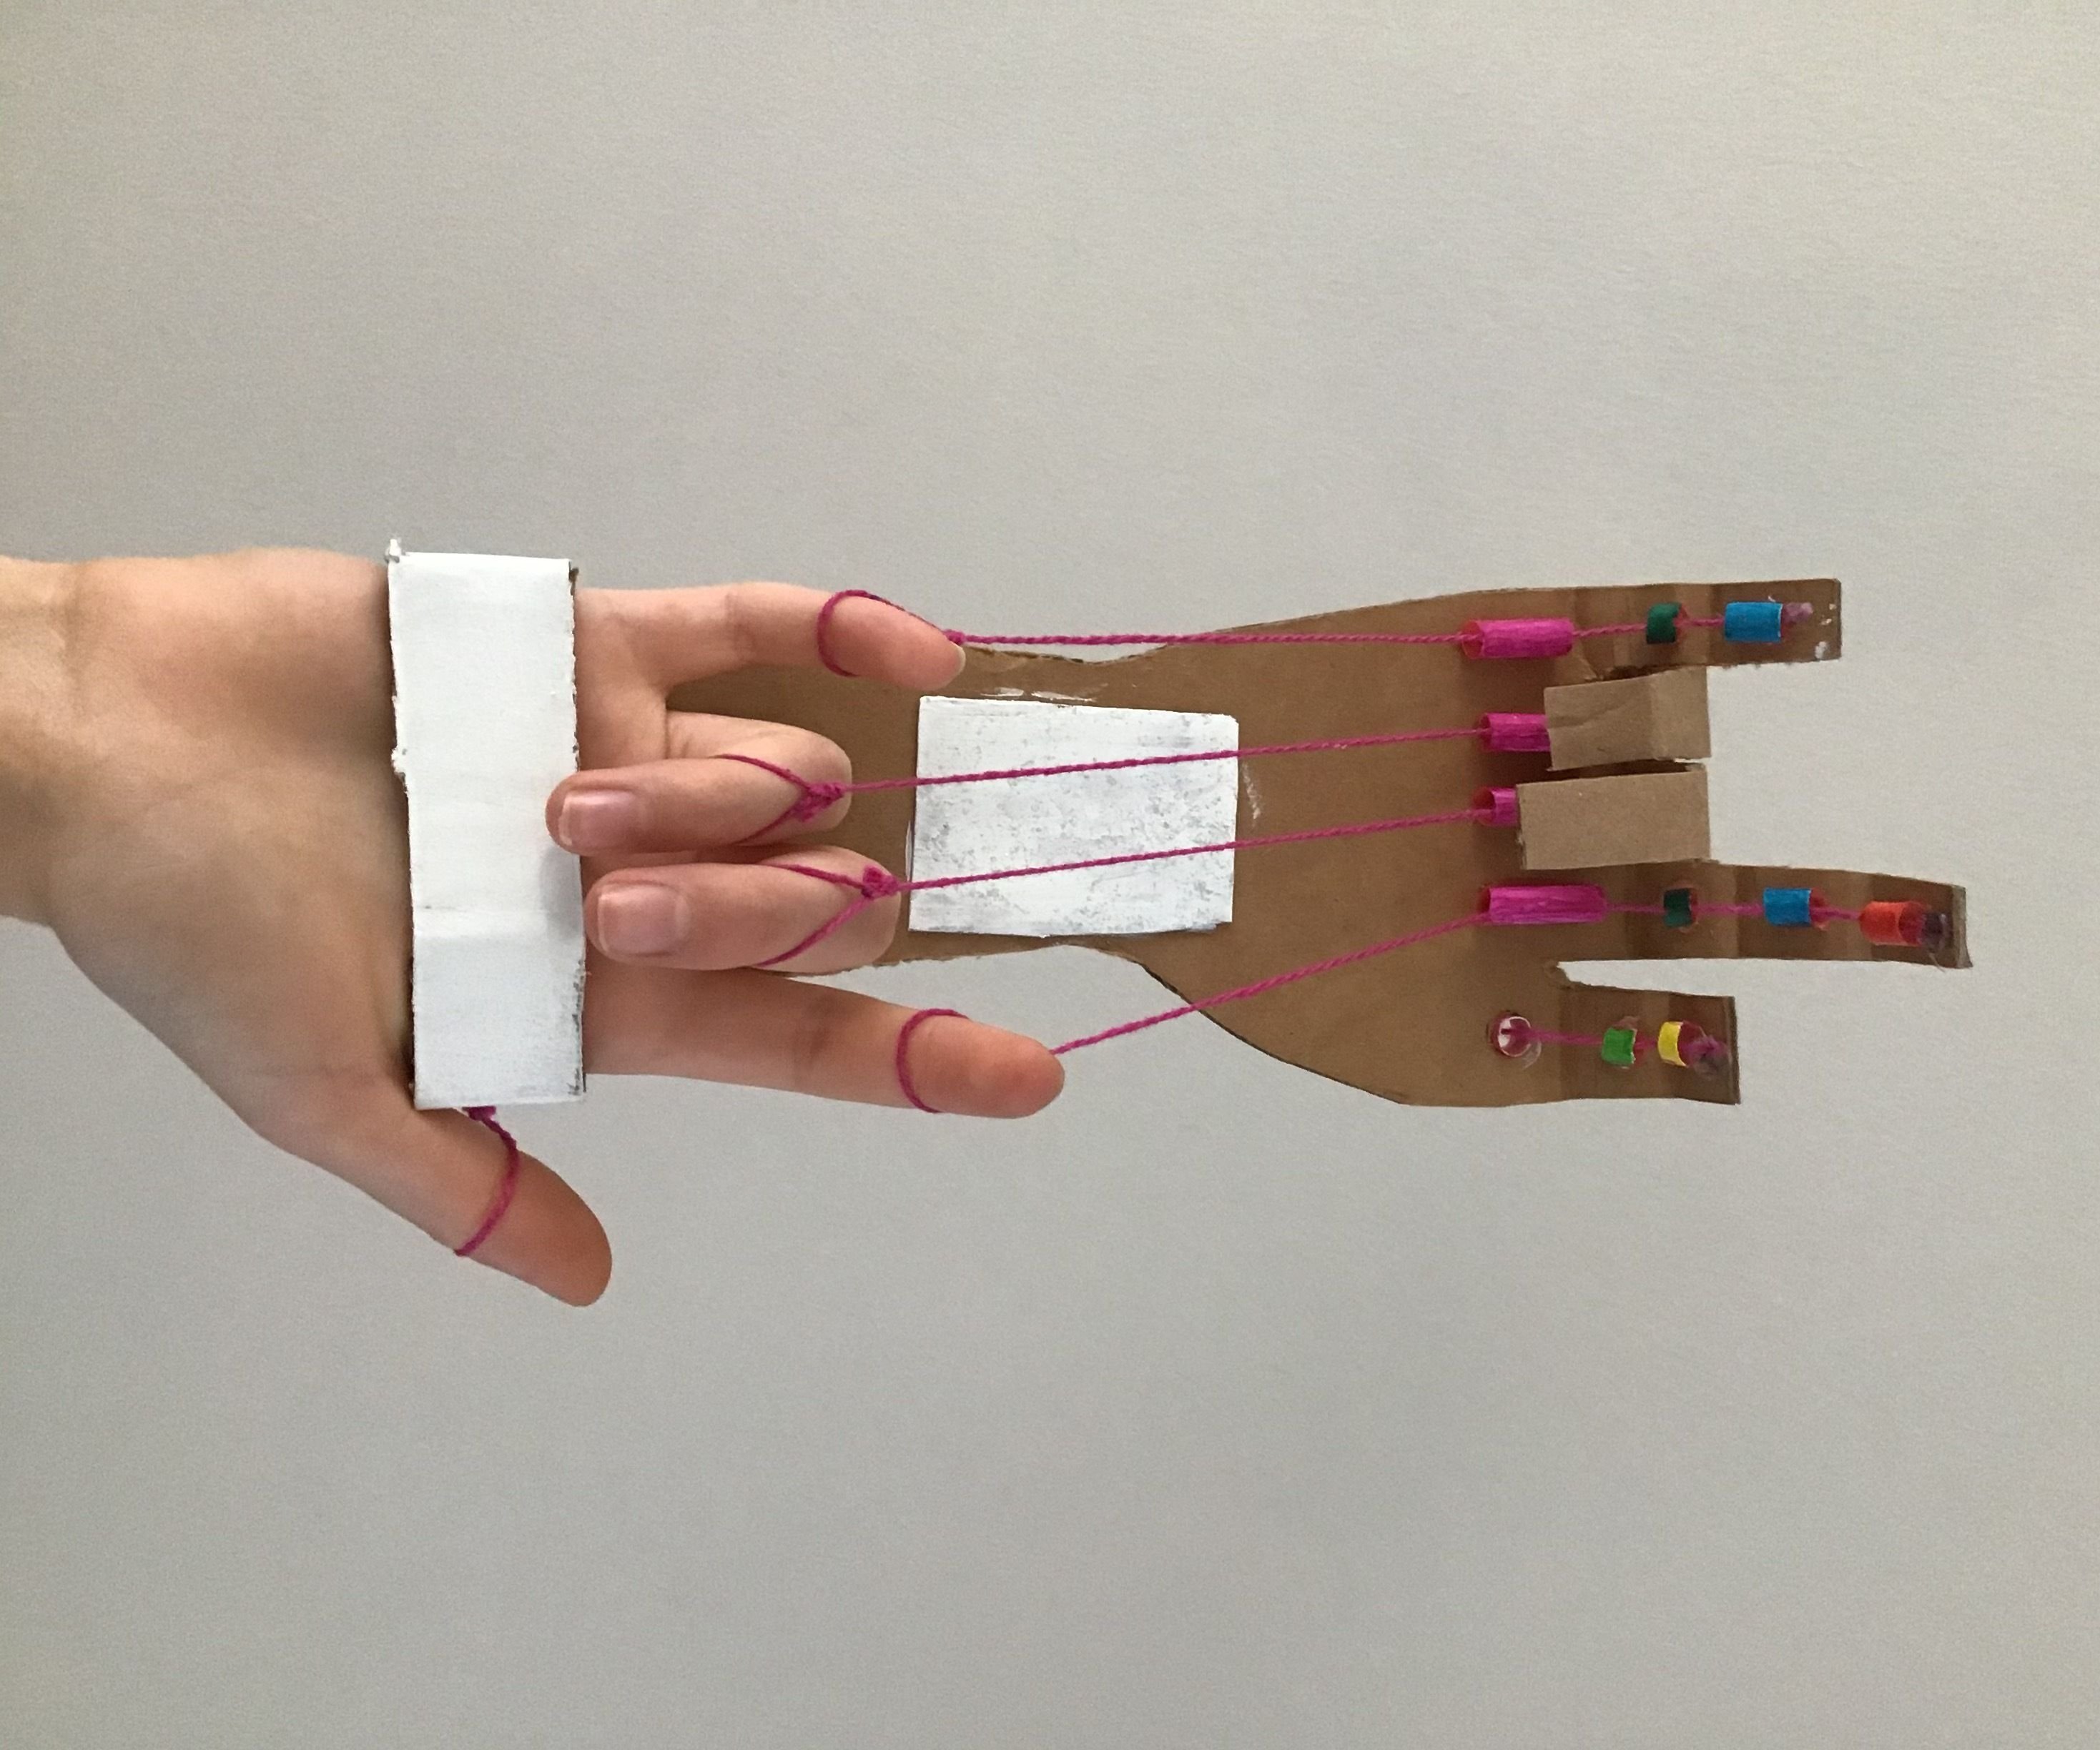 Картонная рука. Рука из картона. Роборука из картона. Механическая рука картон.